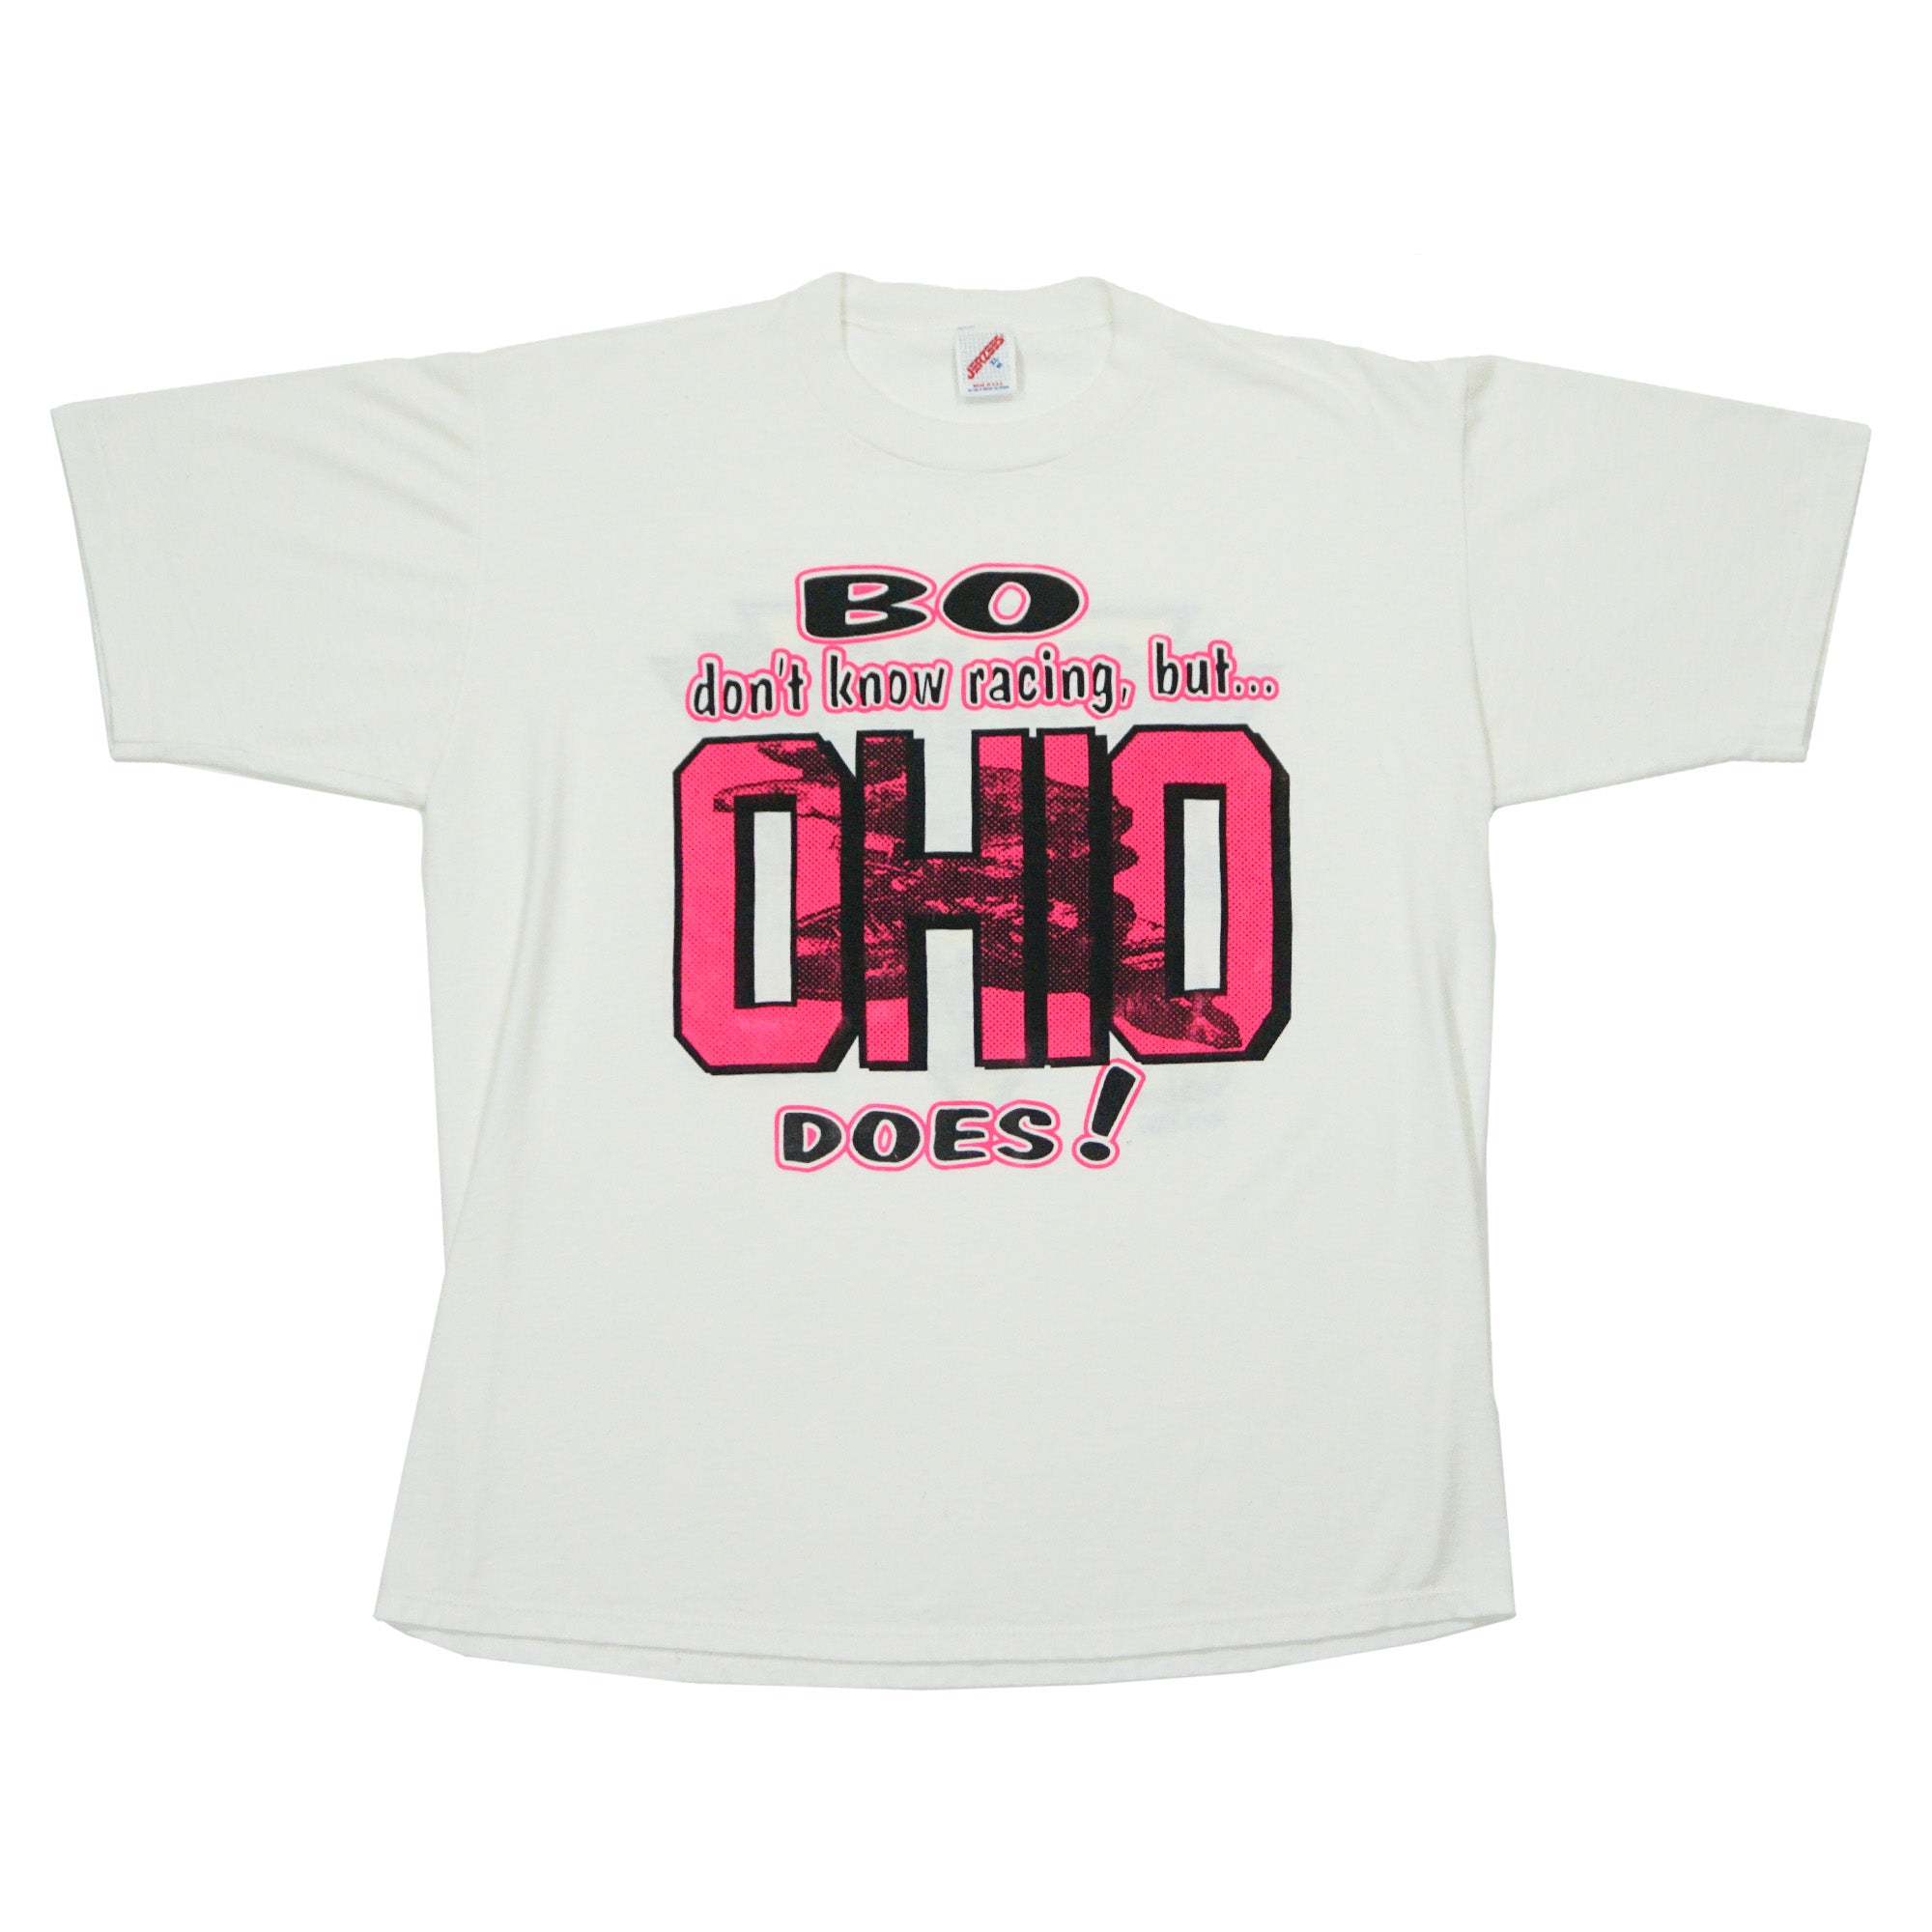 NBL - Ohio President's Cup Shirt (XL)